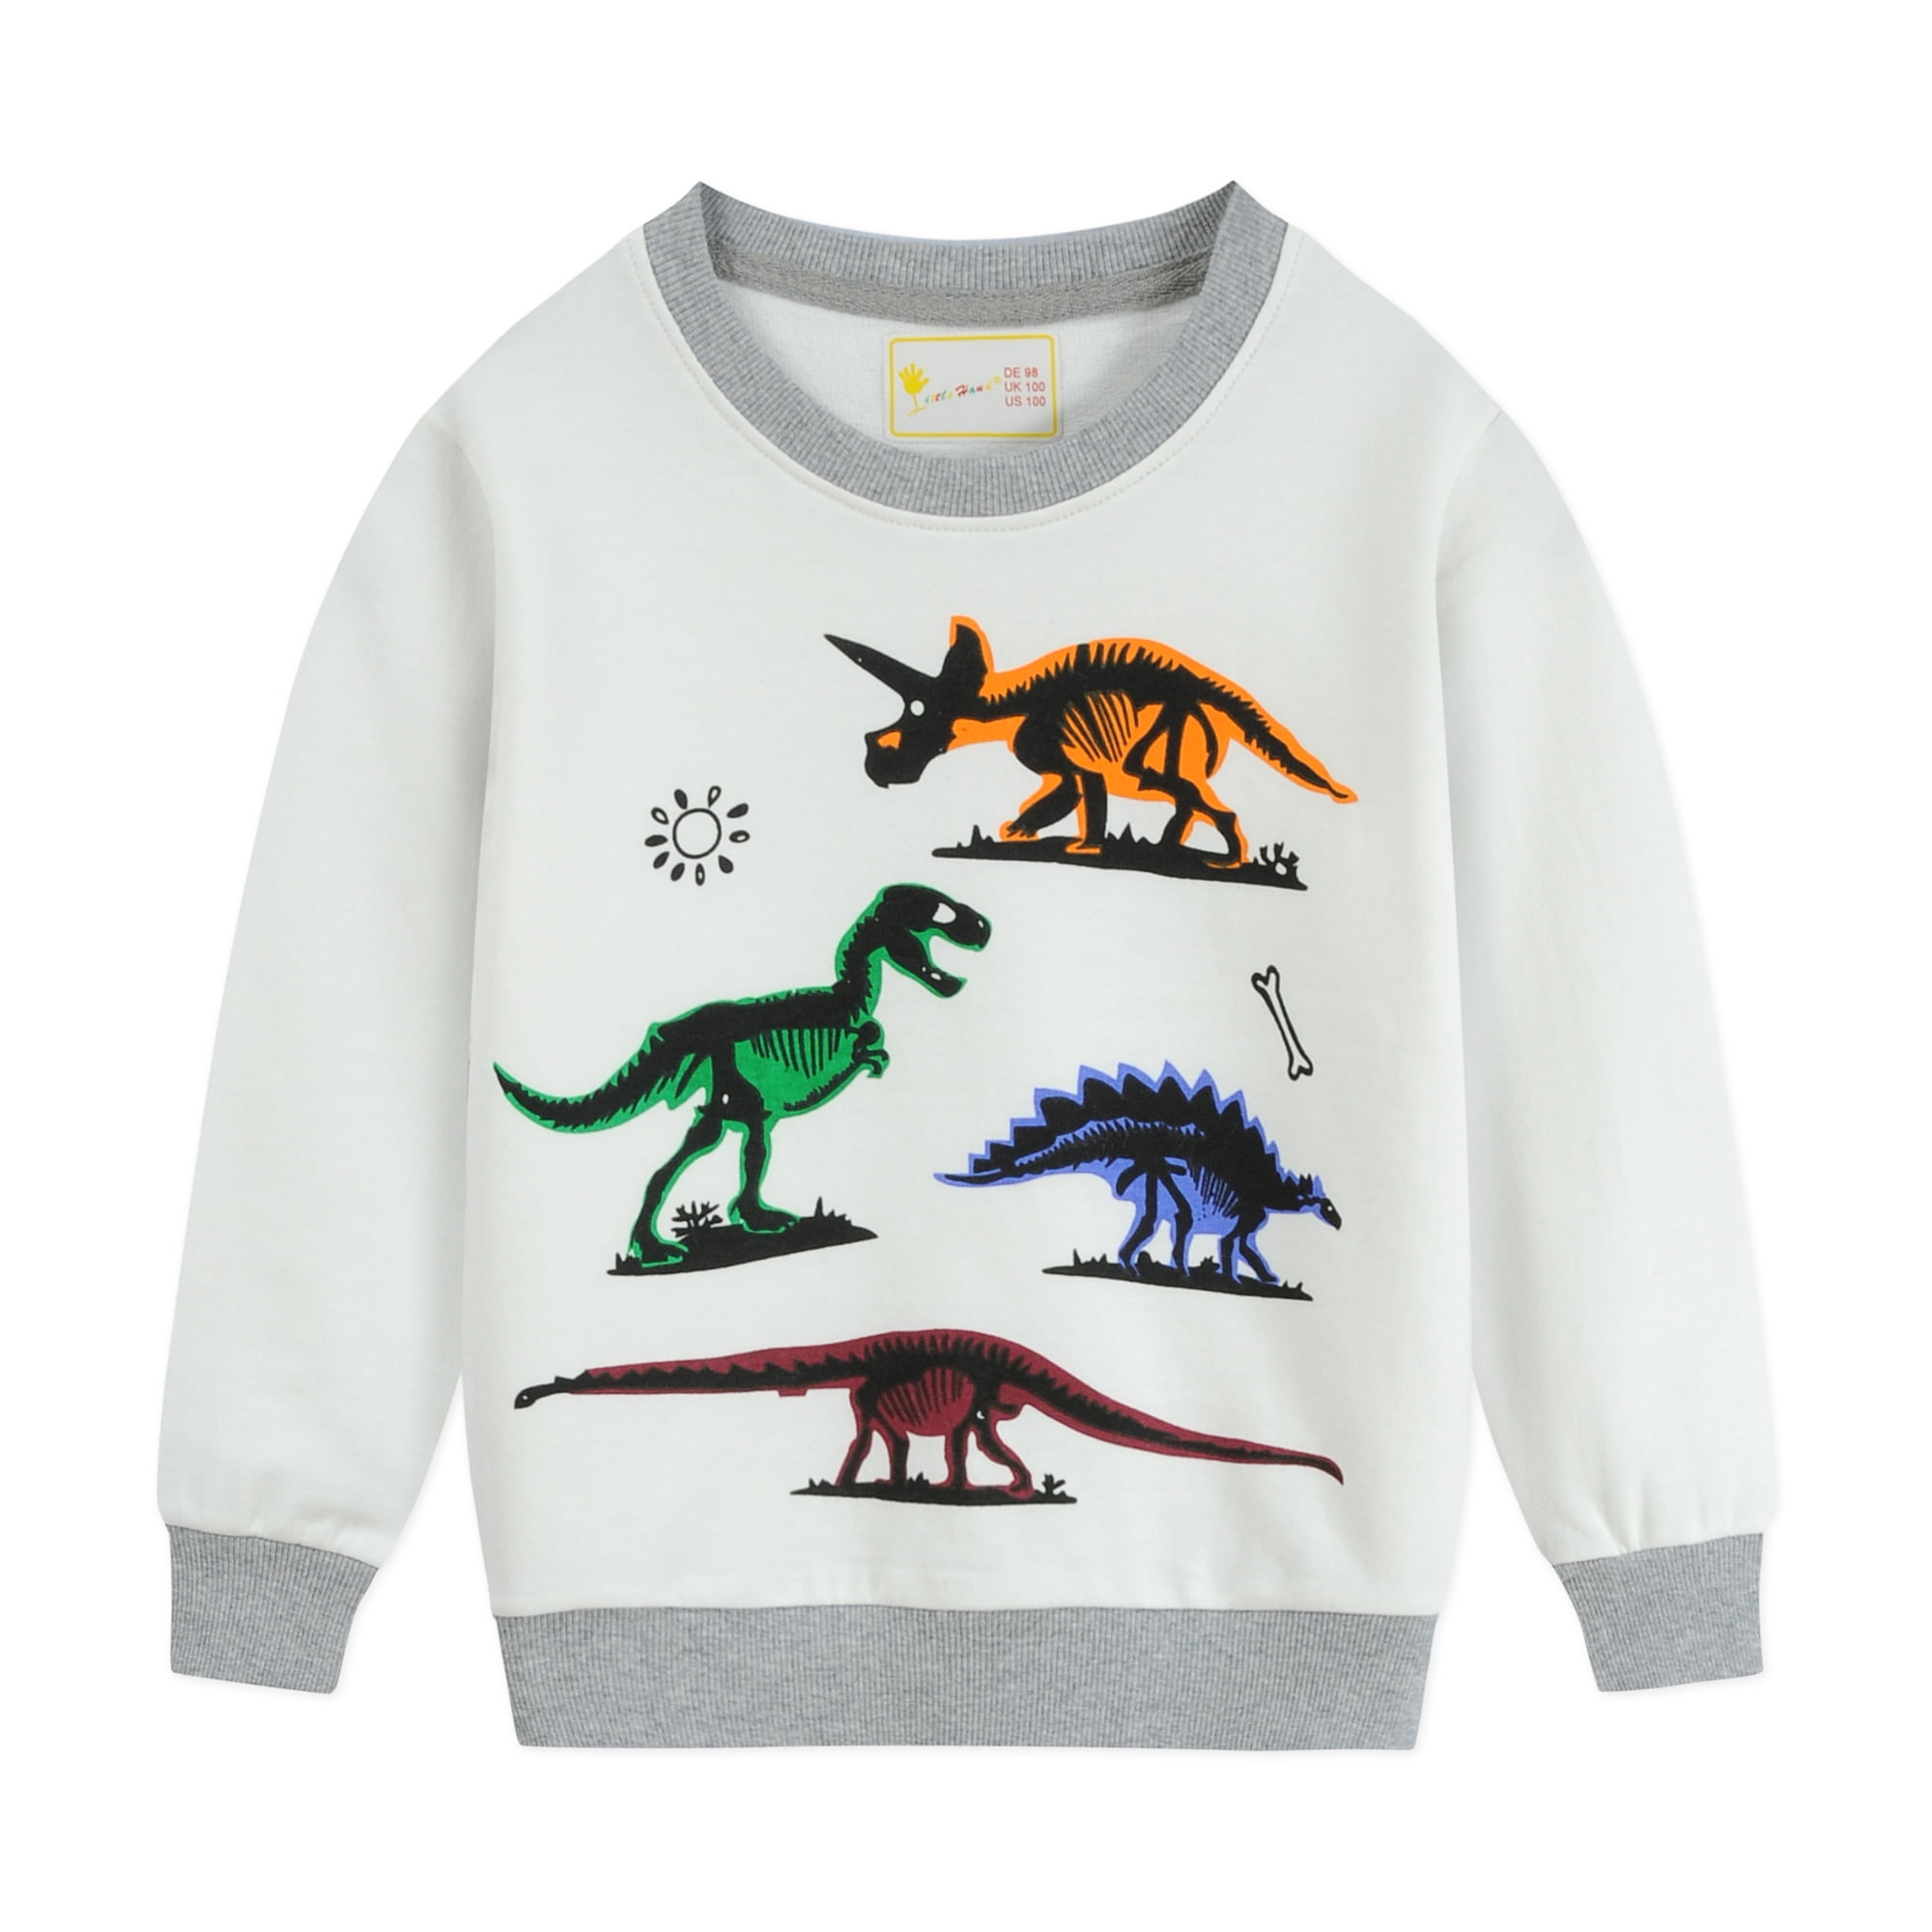 CM-Kid Toddler Boys Sweatshirts Long Sleeve Tops Dinosaur Shirt 4T ...